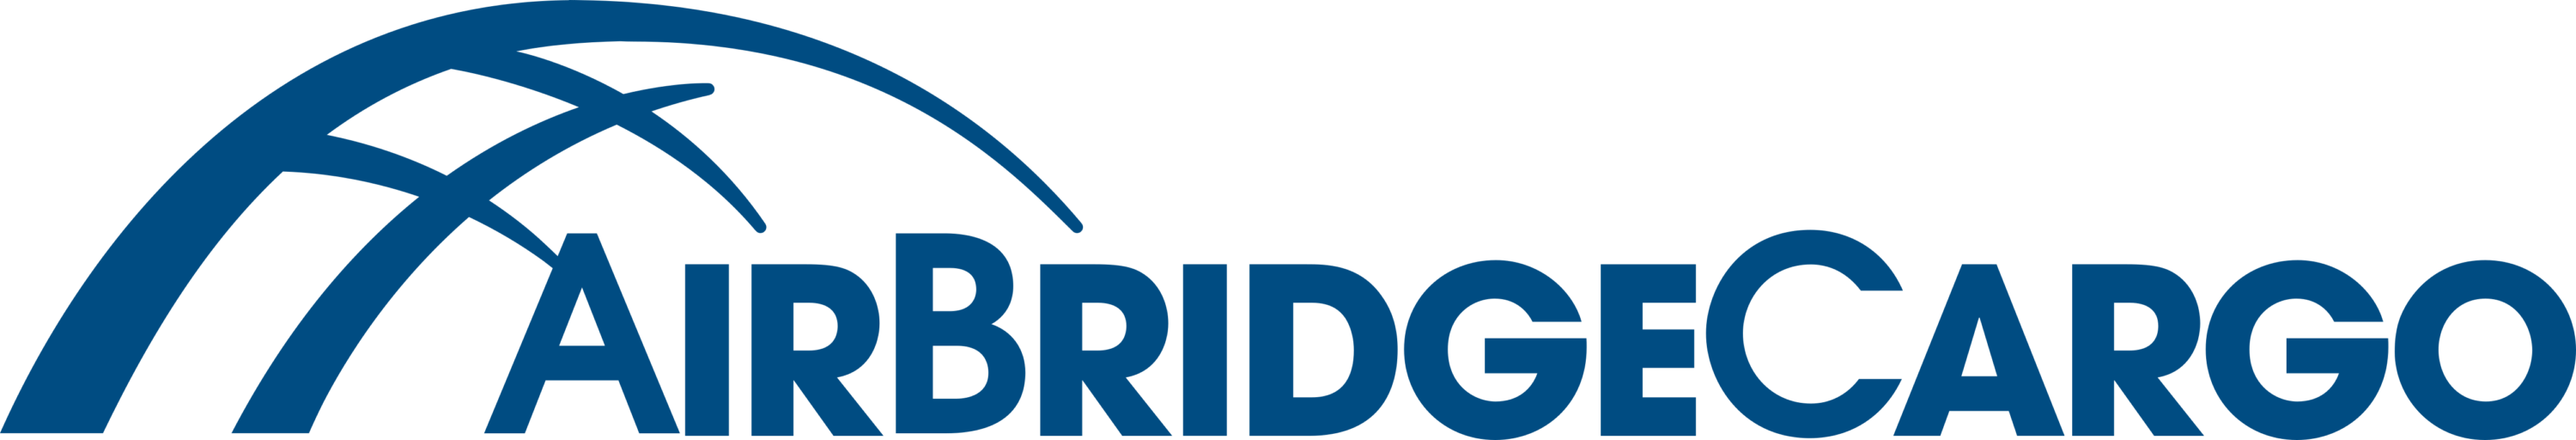 AirBridgeCargo Logo